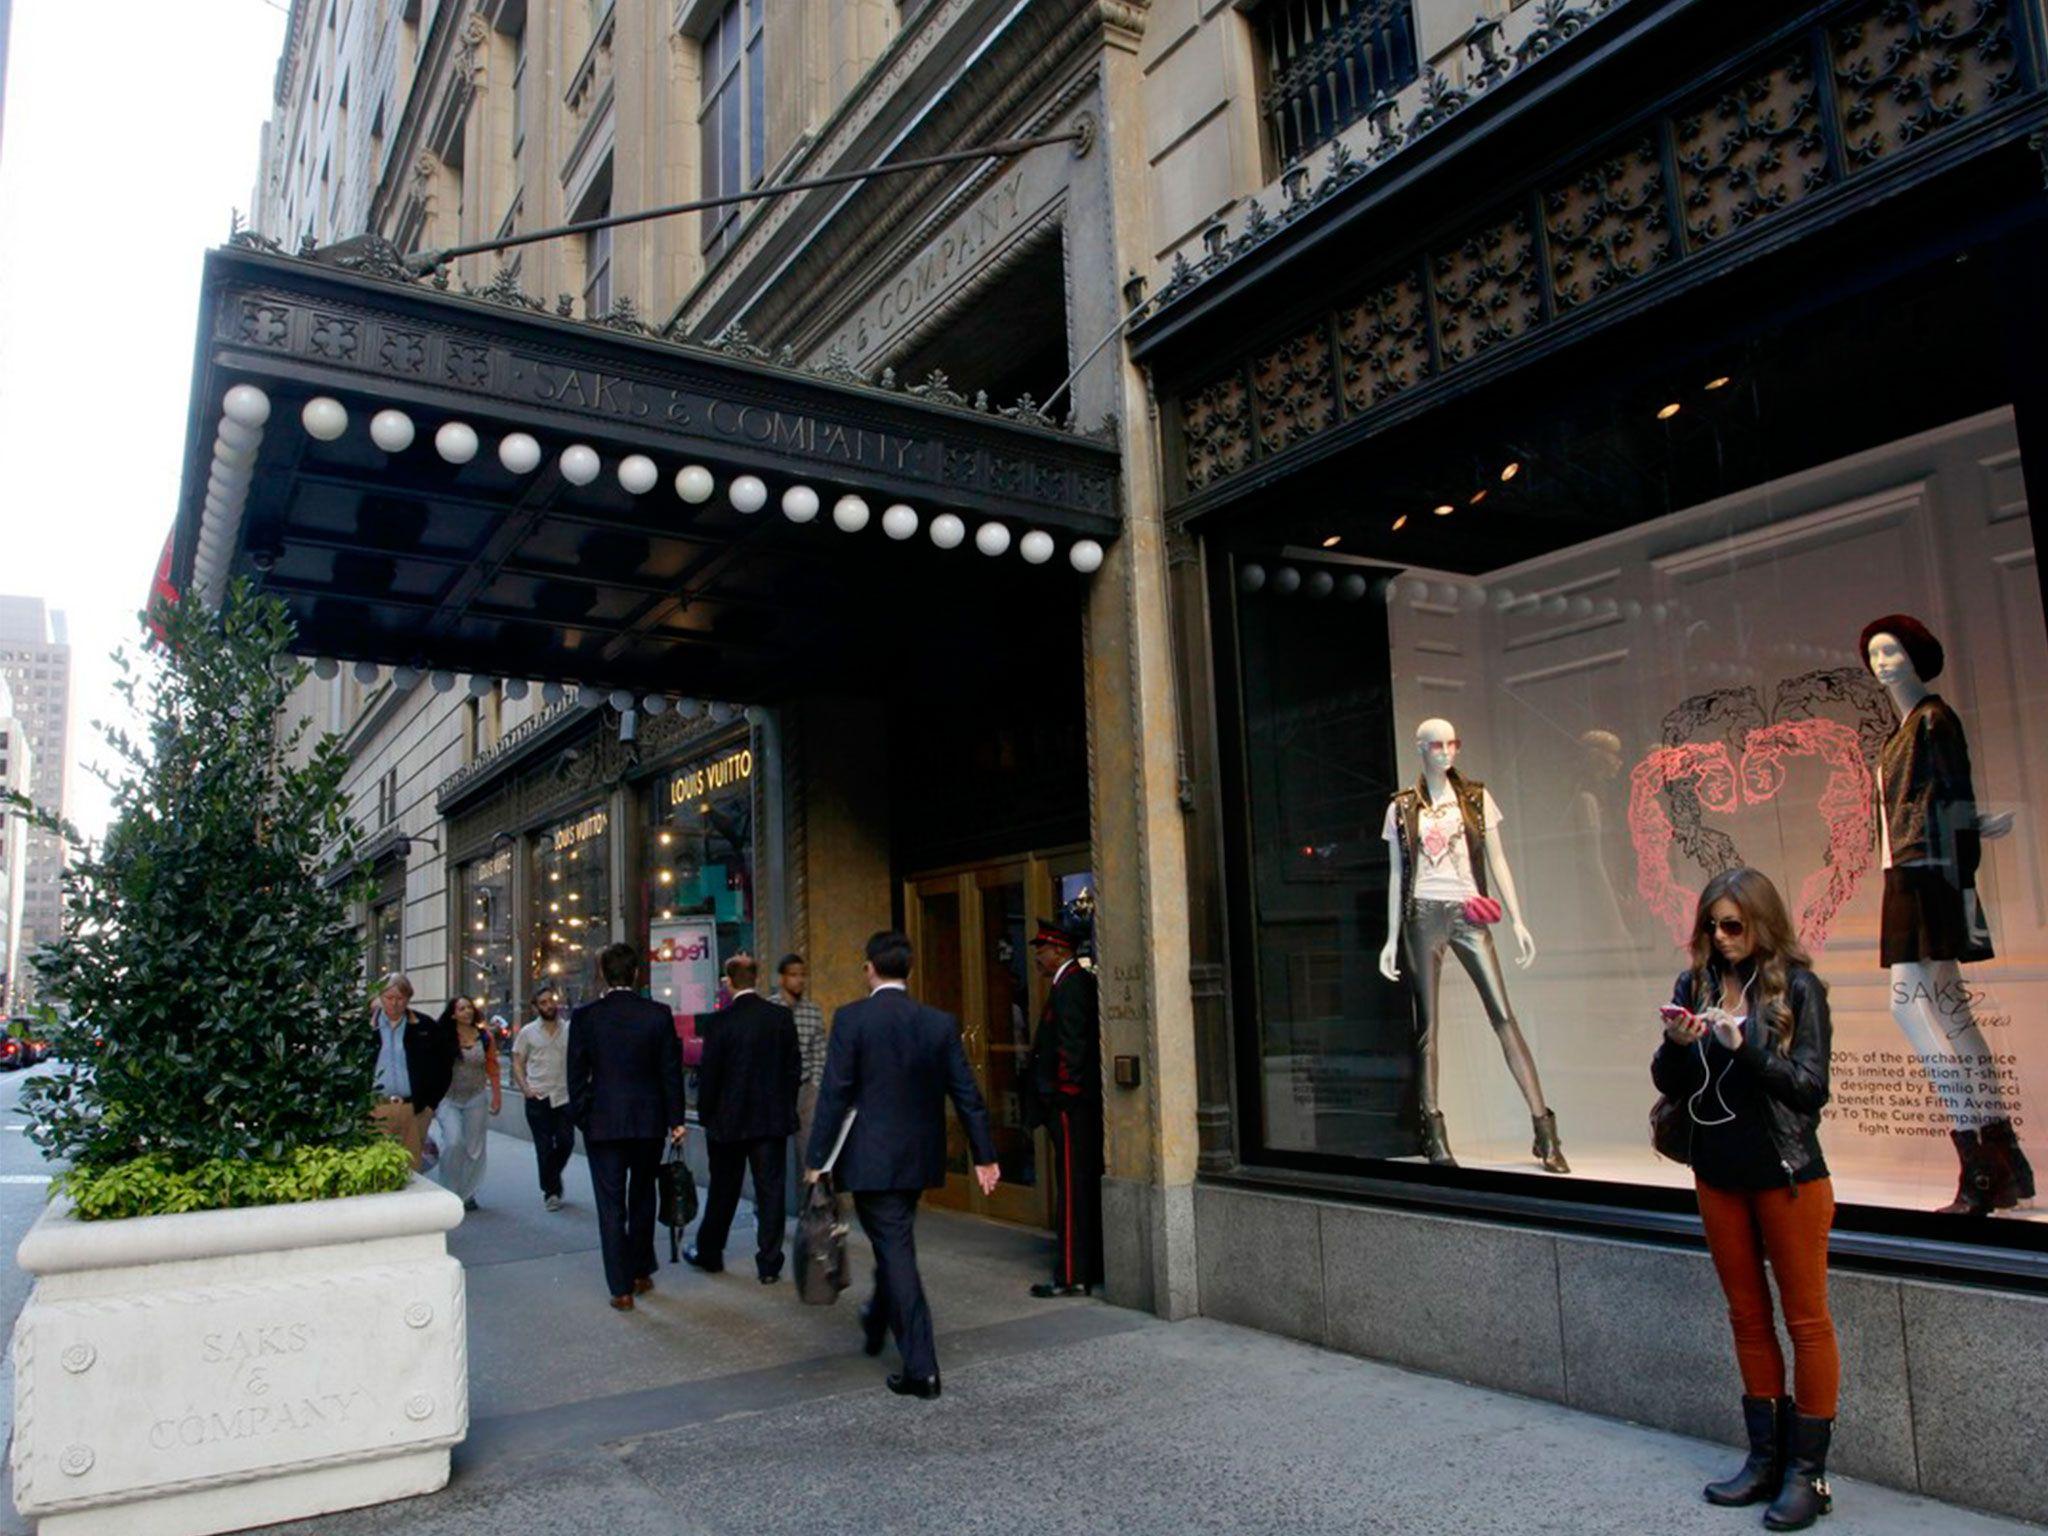 Saks opens Manhattan store off its namesake avenue